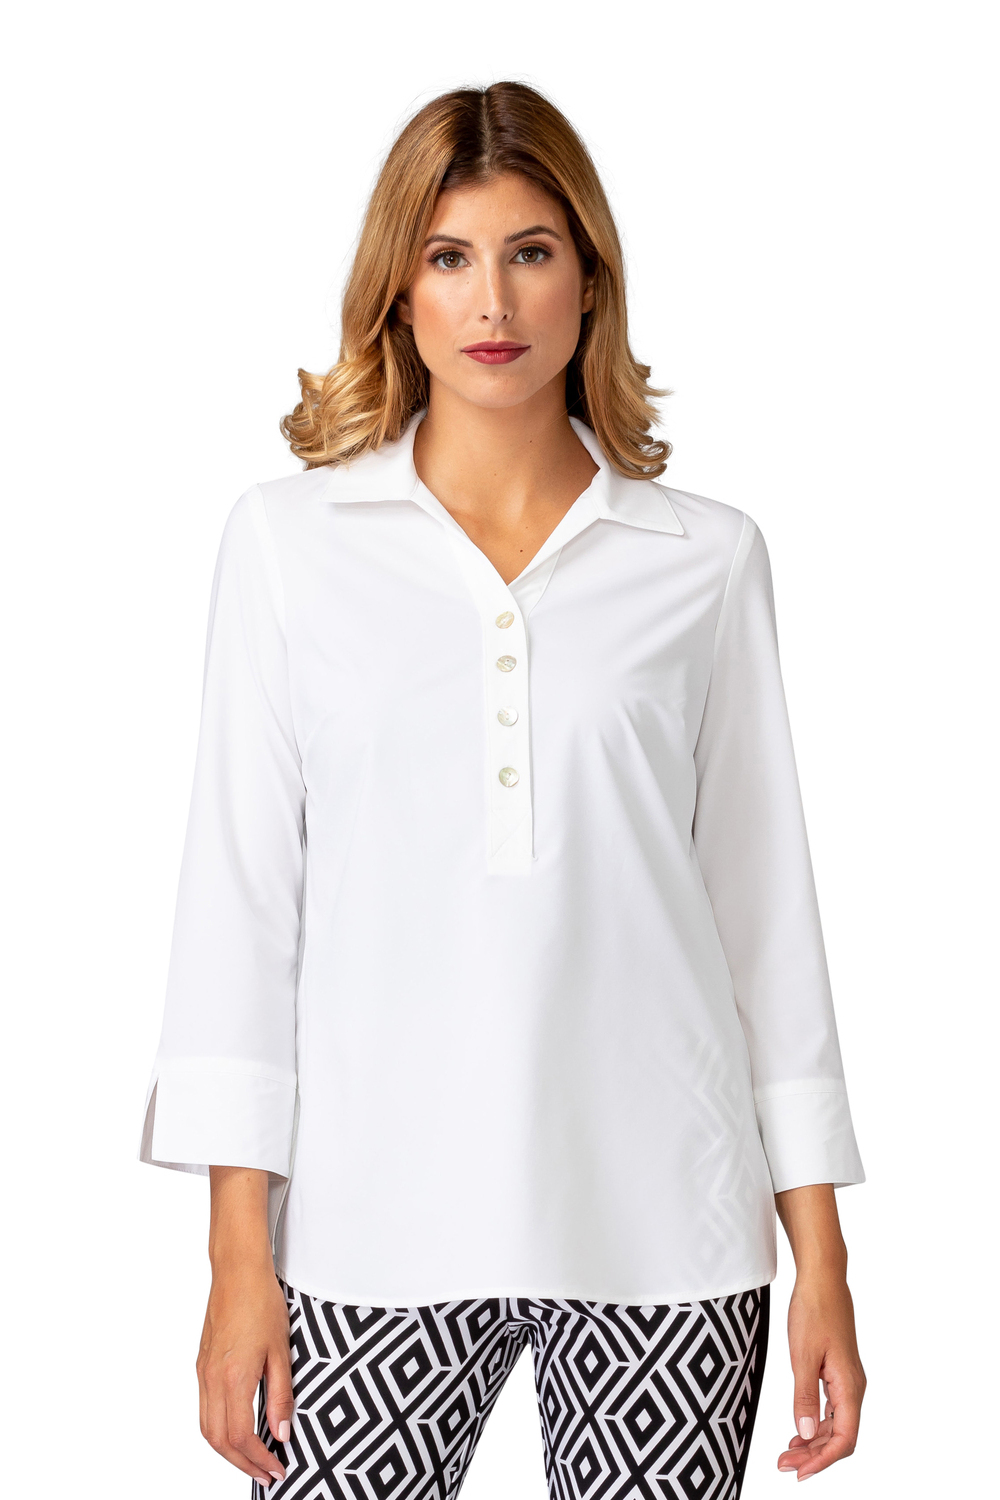 Joseph Ribkoff blouse style 193417. White